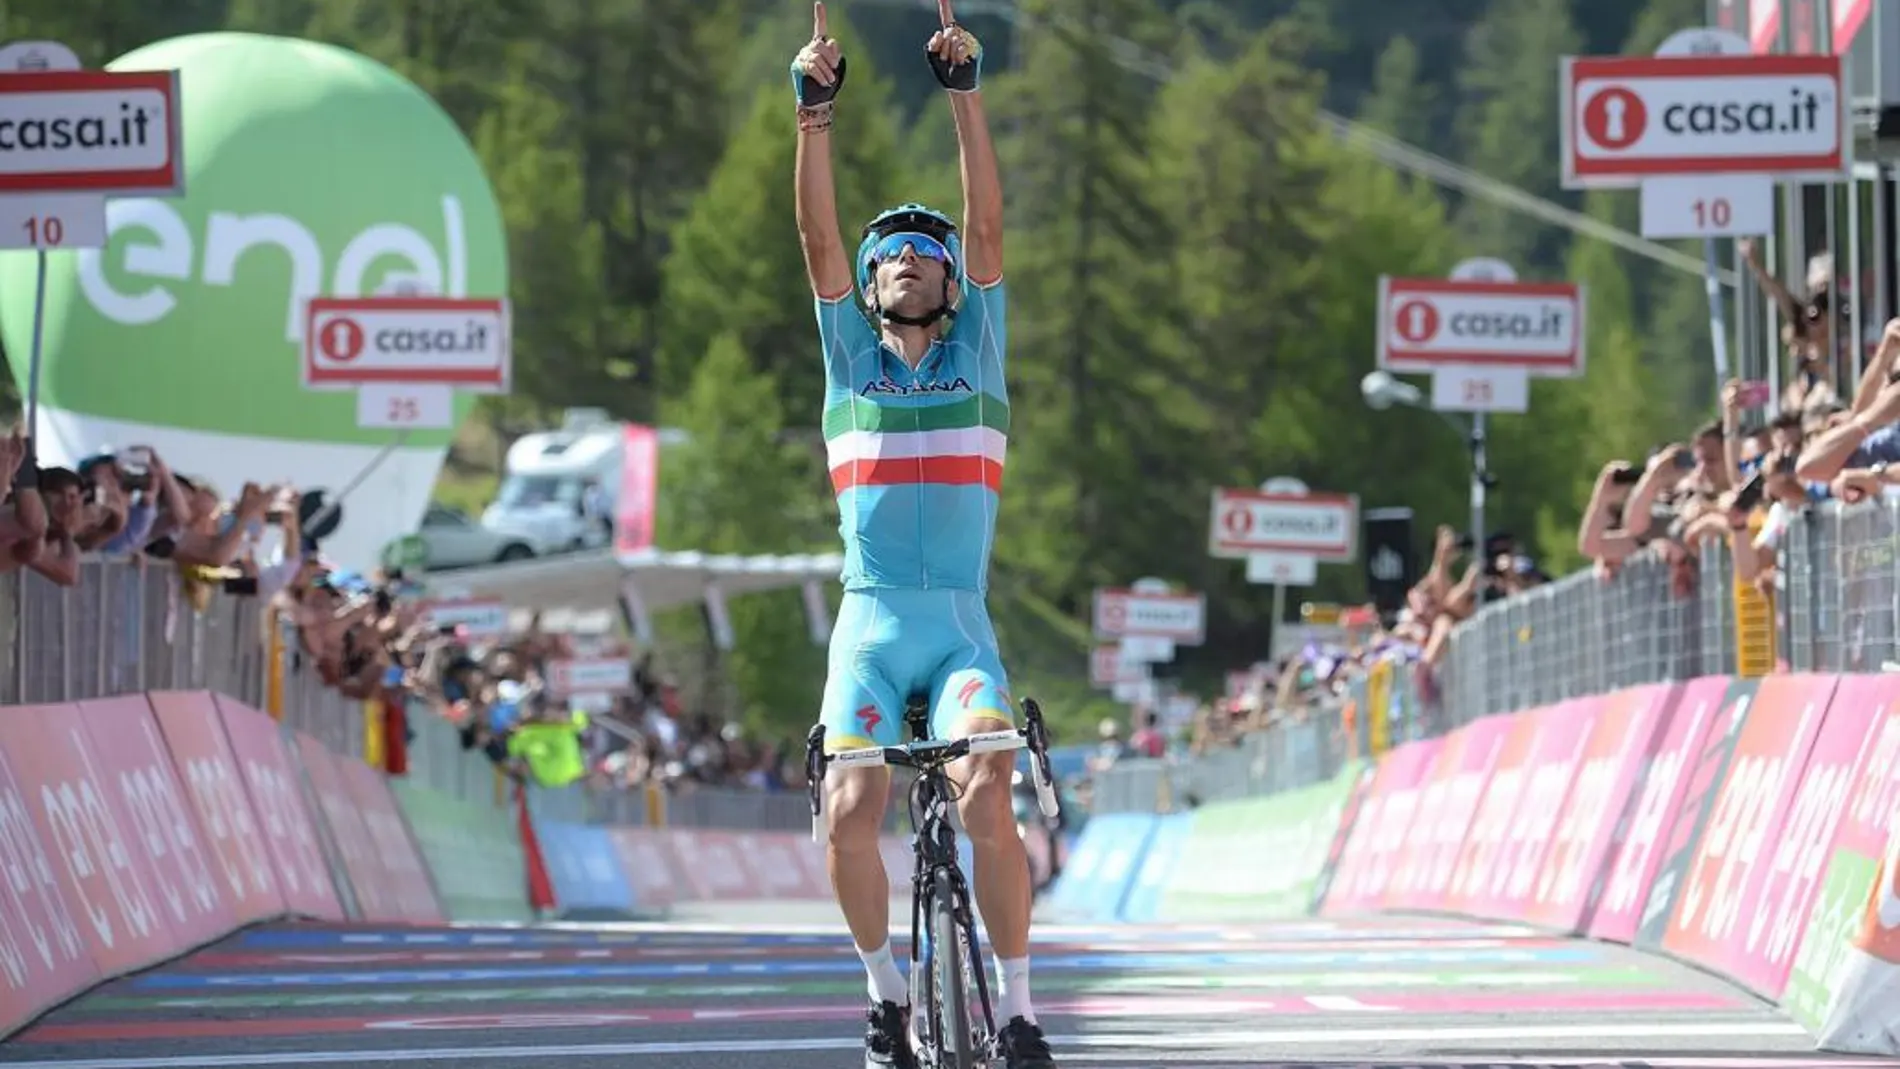 El ciclista italiano Vincenzo Nibali del equipo Astana celebra su victoria tras la decimonovena etapa del Giro de Italia